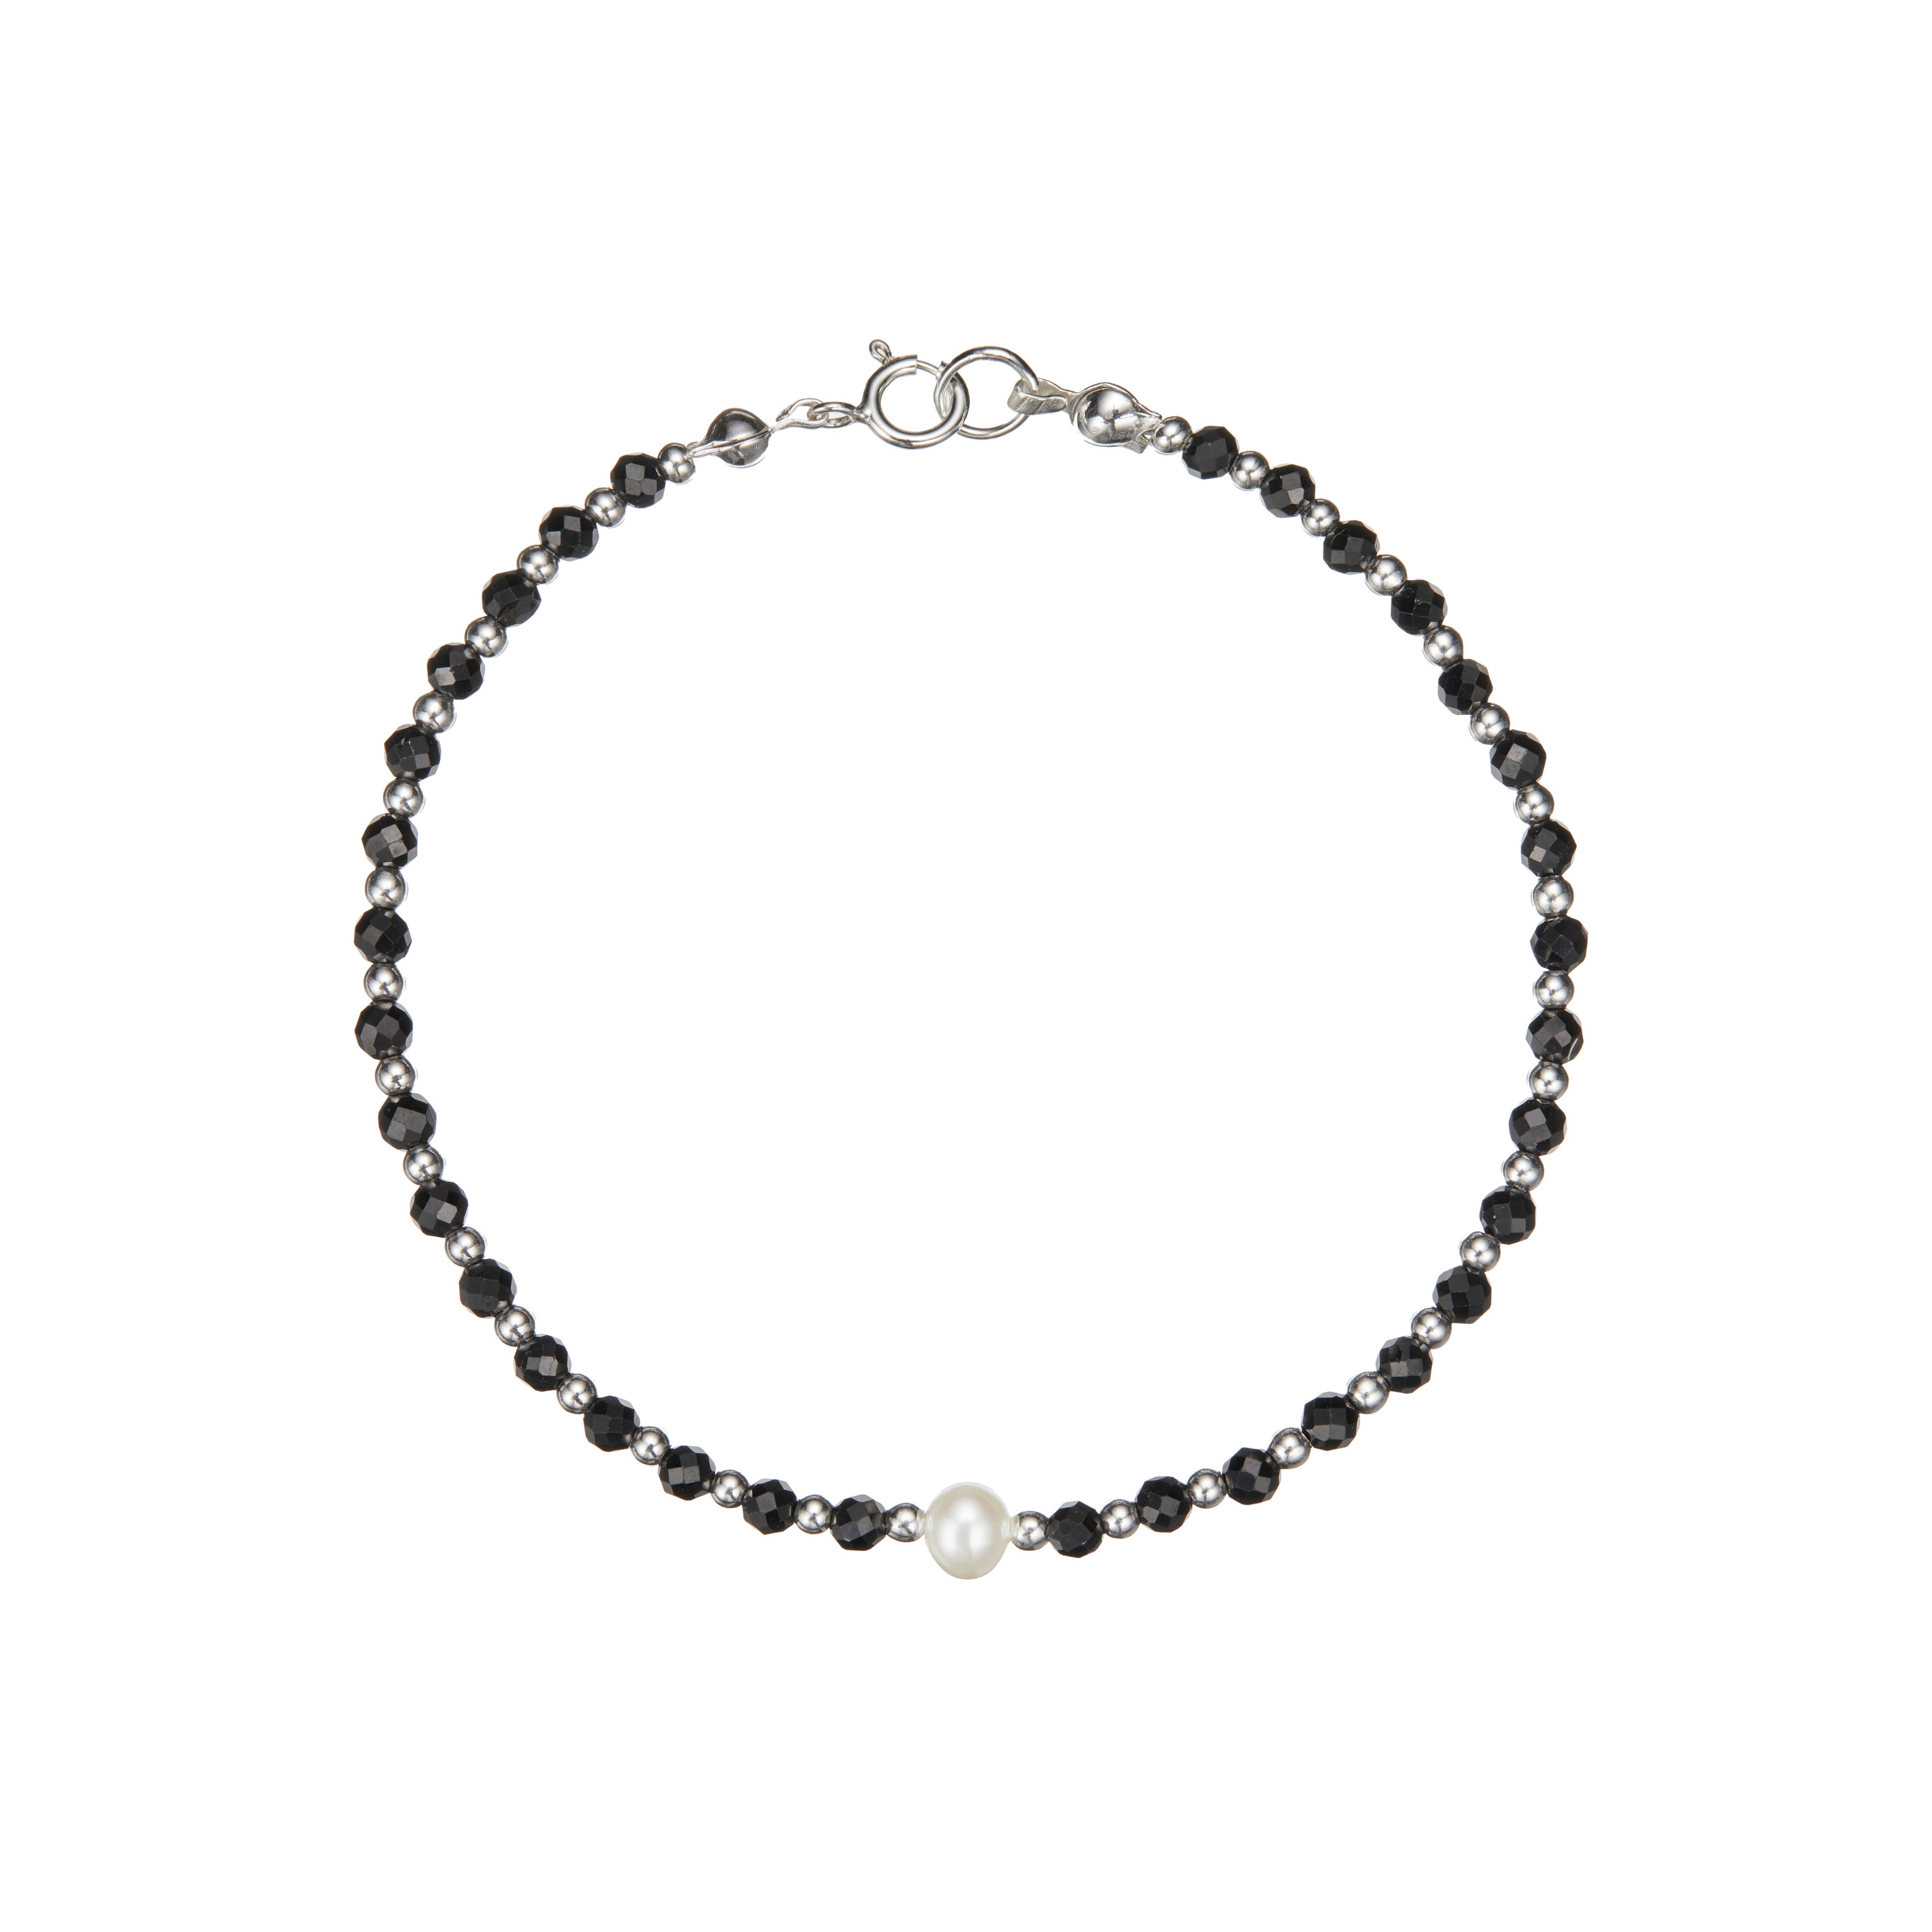 Silver spinel gemstone bracelet on a white background